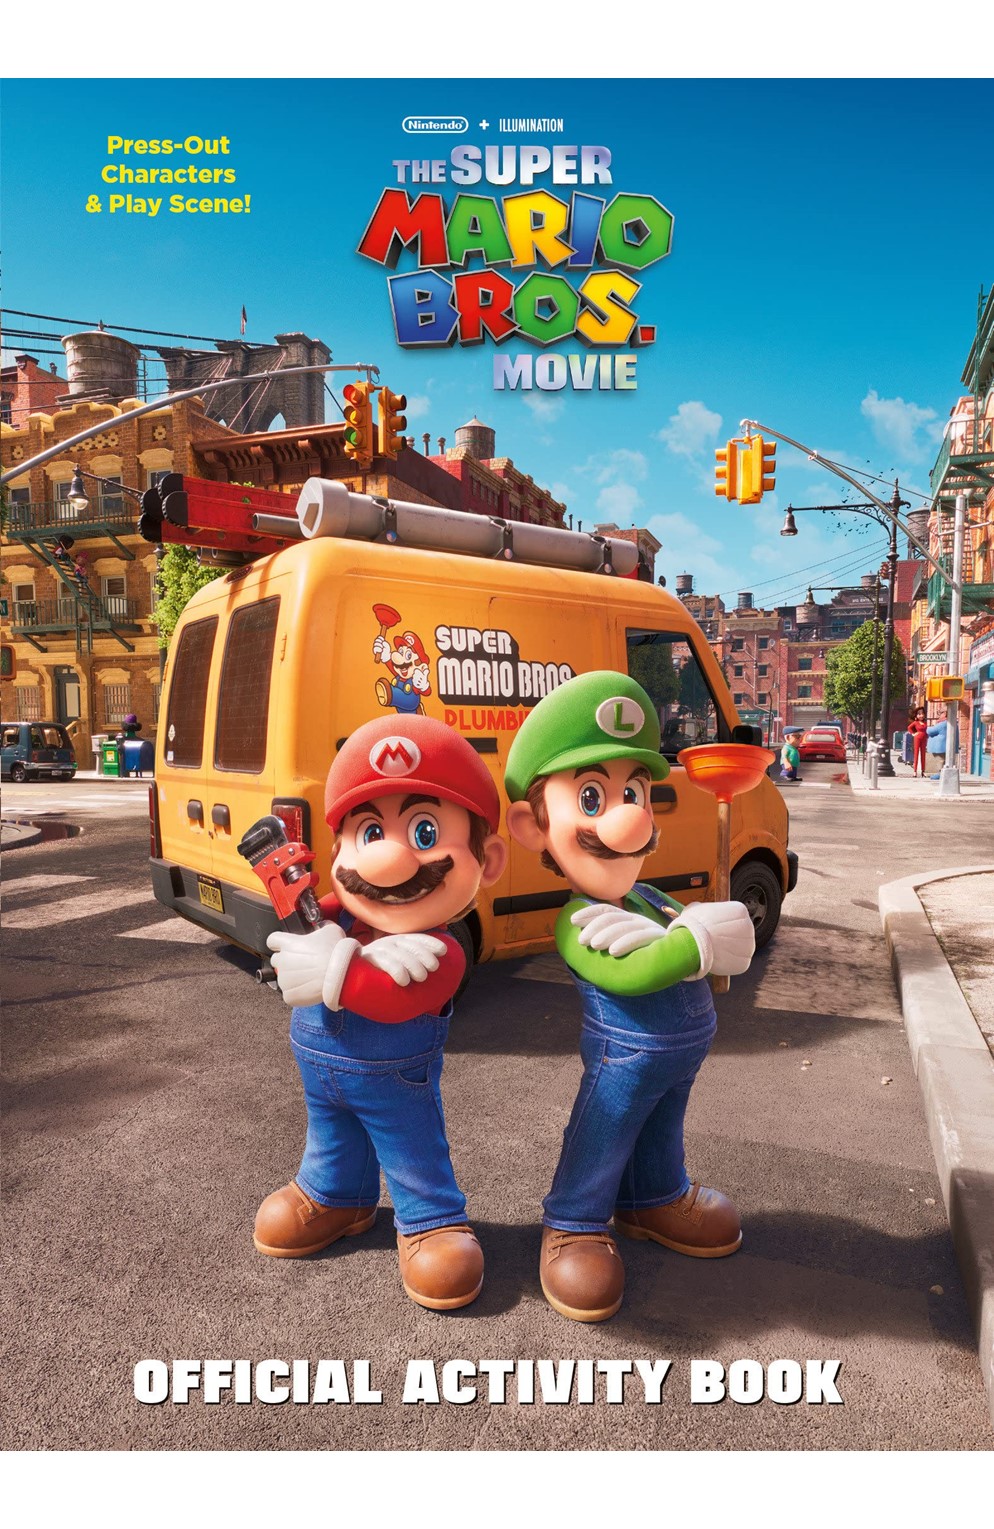 Nintendo And Illumination Present The Super Mario Bros. Movie Official Activity Book